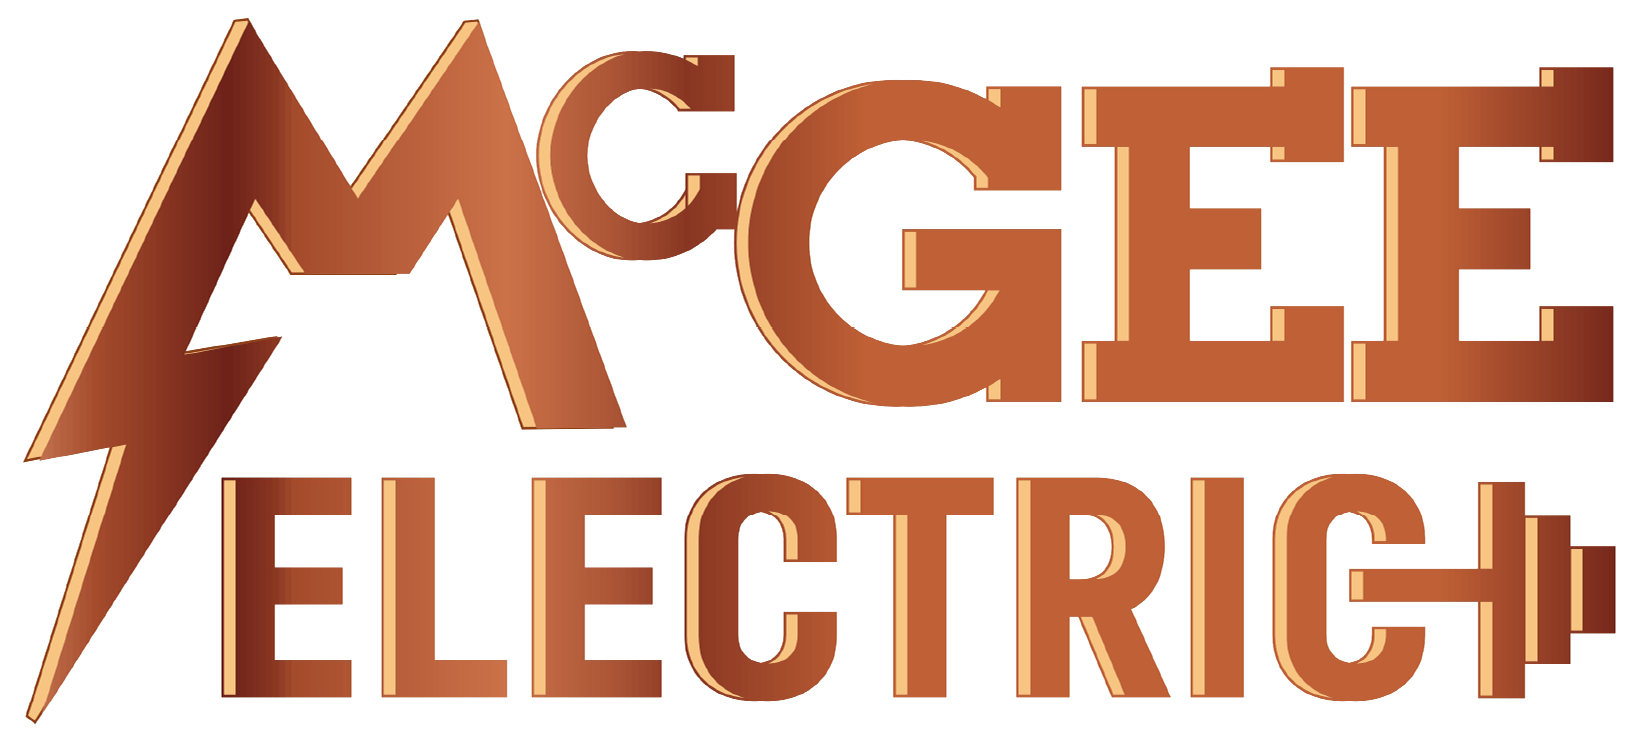 McGee Electric